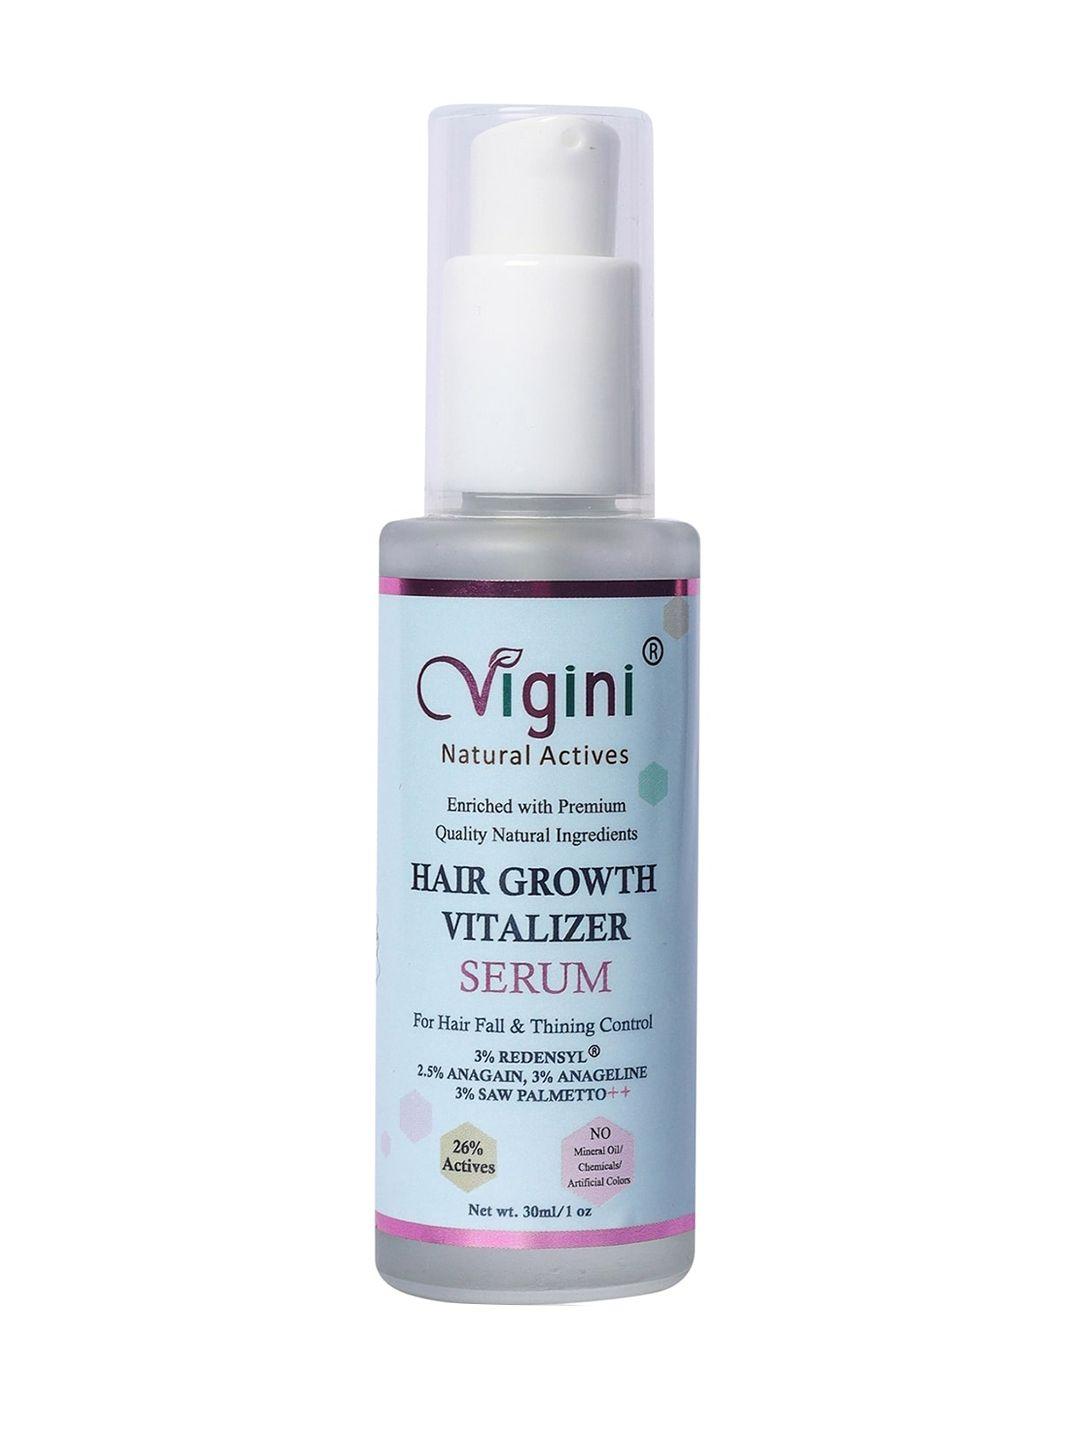 vigini natural actives hair growth vitalizer serum with redensyl & saw palmetto 30 ml